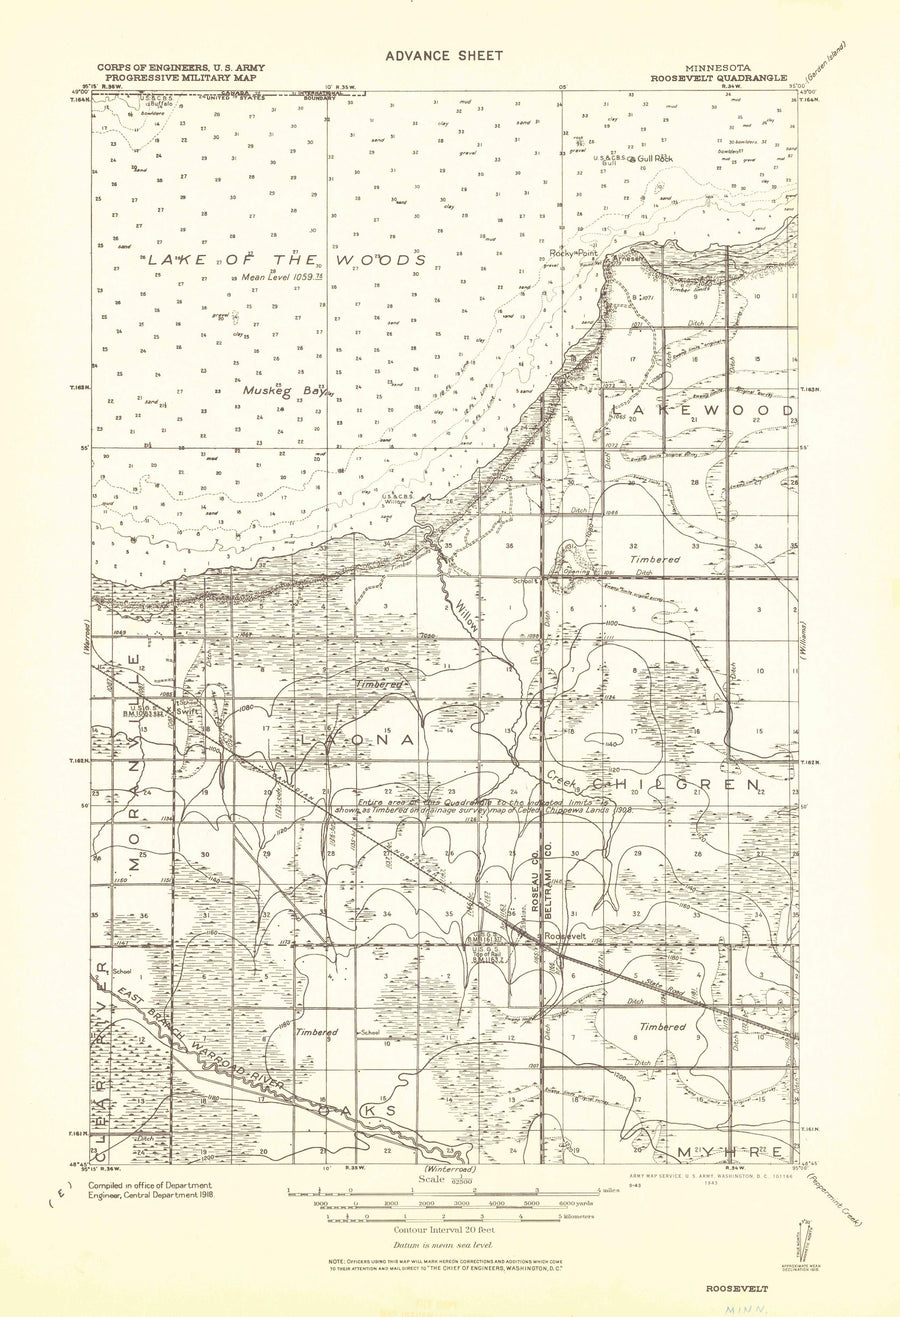 Roosevelt, Minnesota Topographic Map - 1943